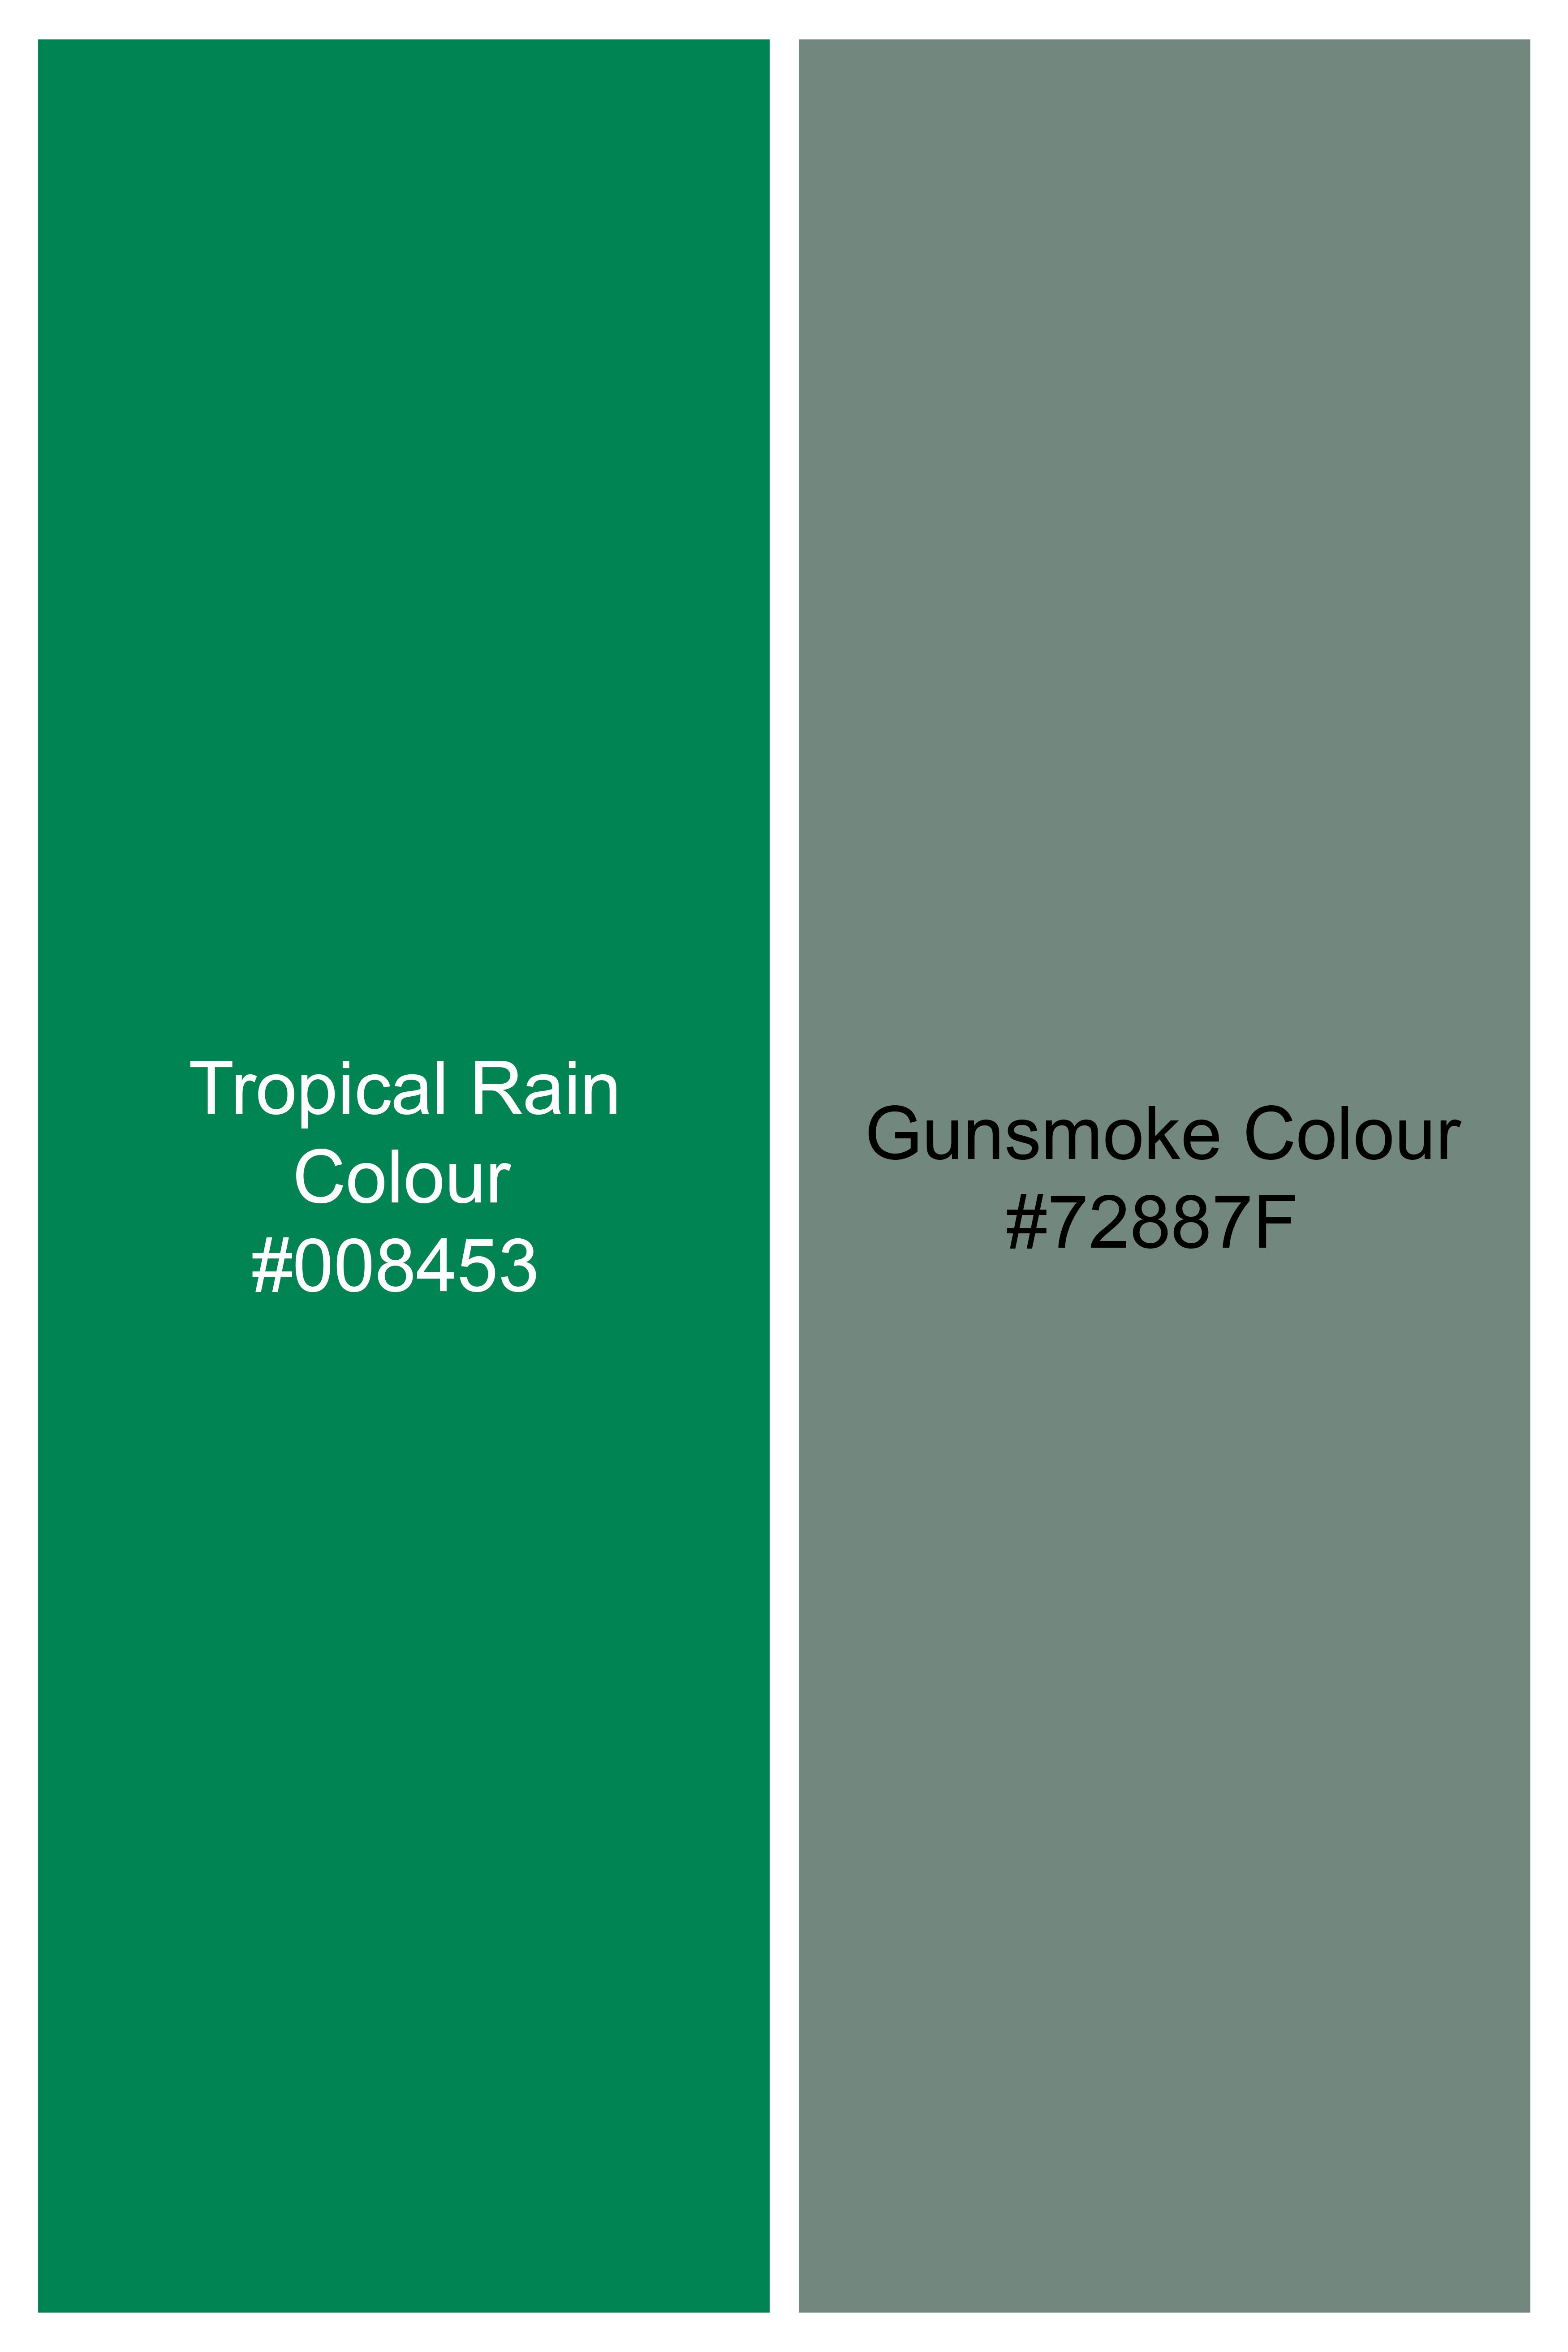 Tropical Rain Green with Gunsmoke Gray Paisley Jacquard Tie with Pocket Square  TP059